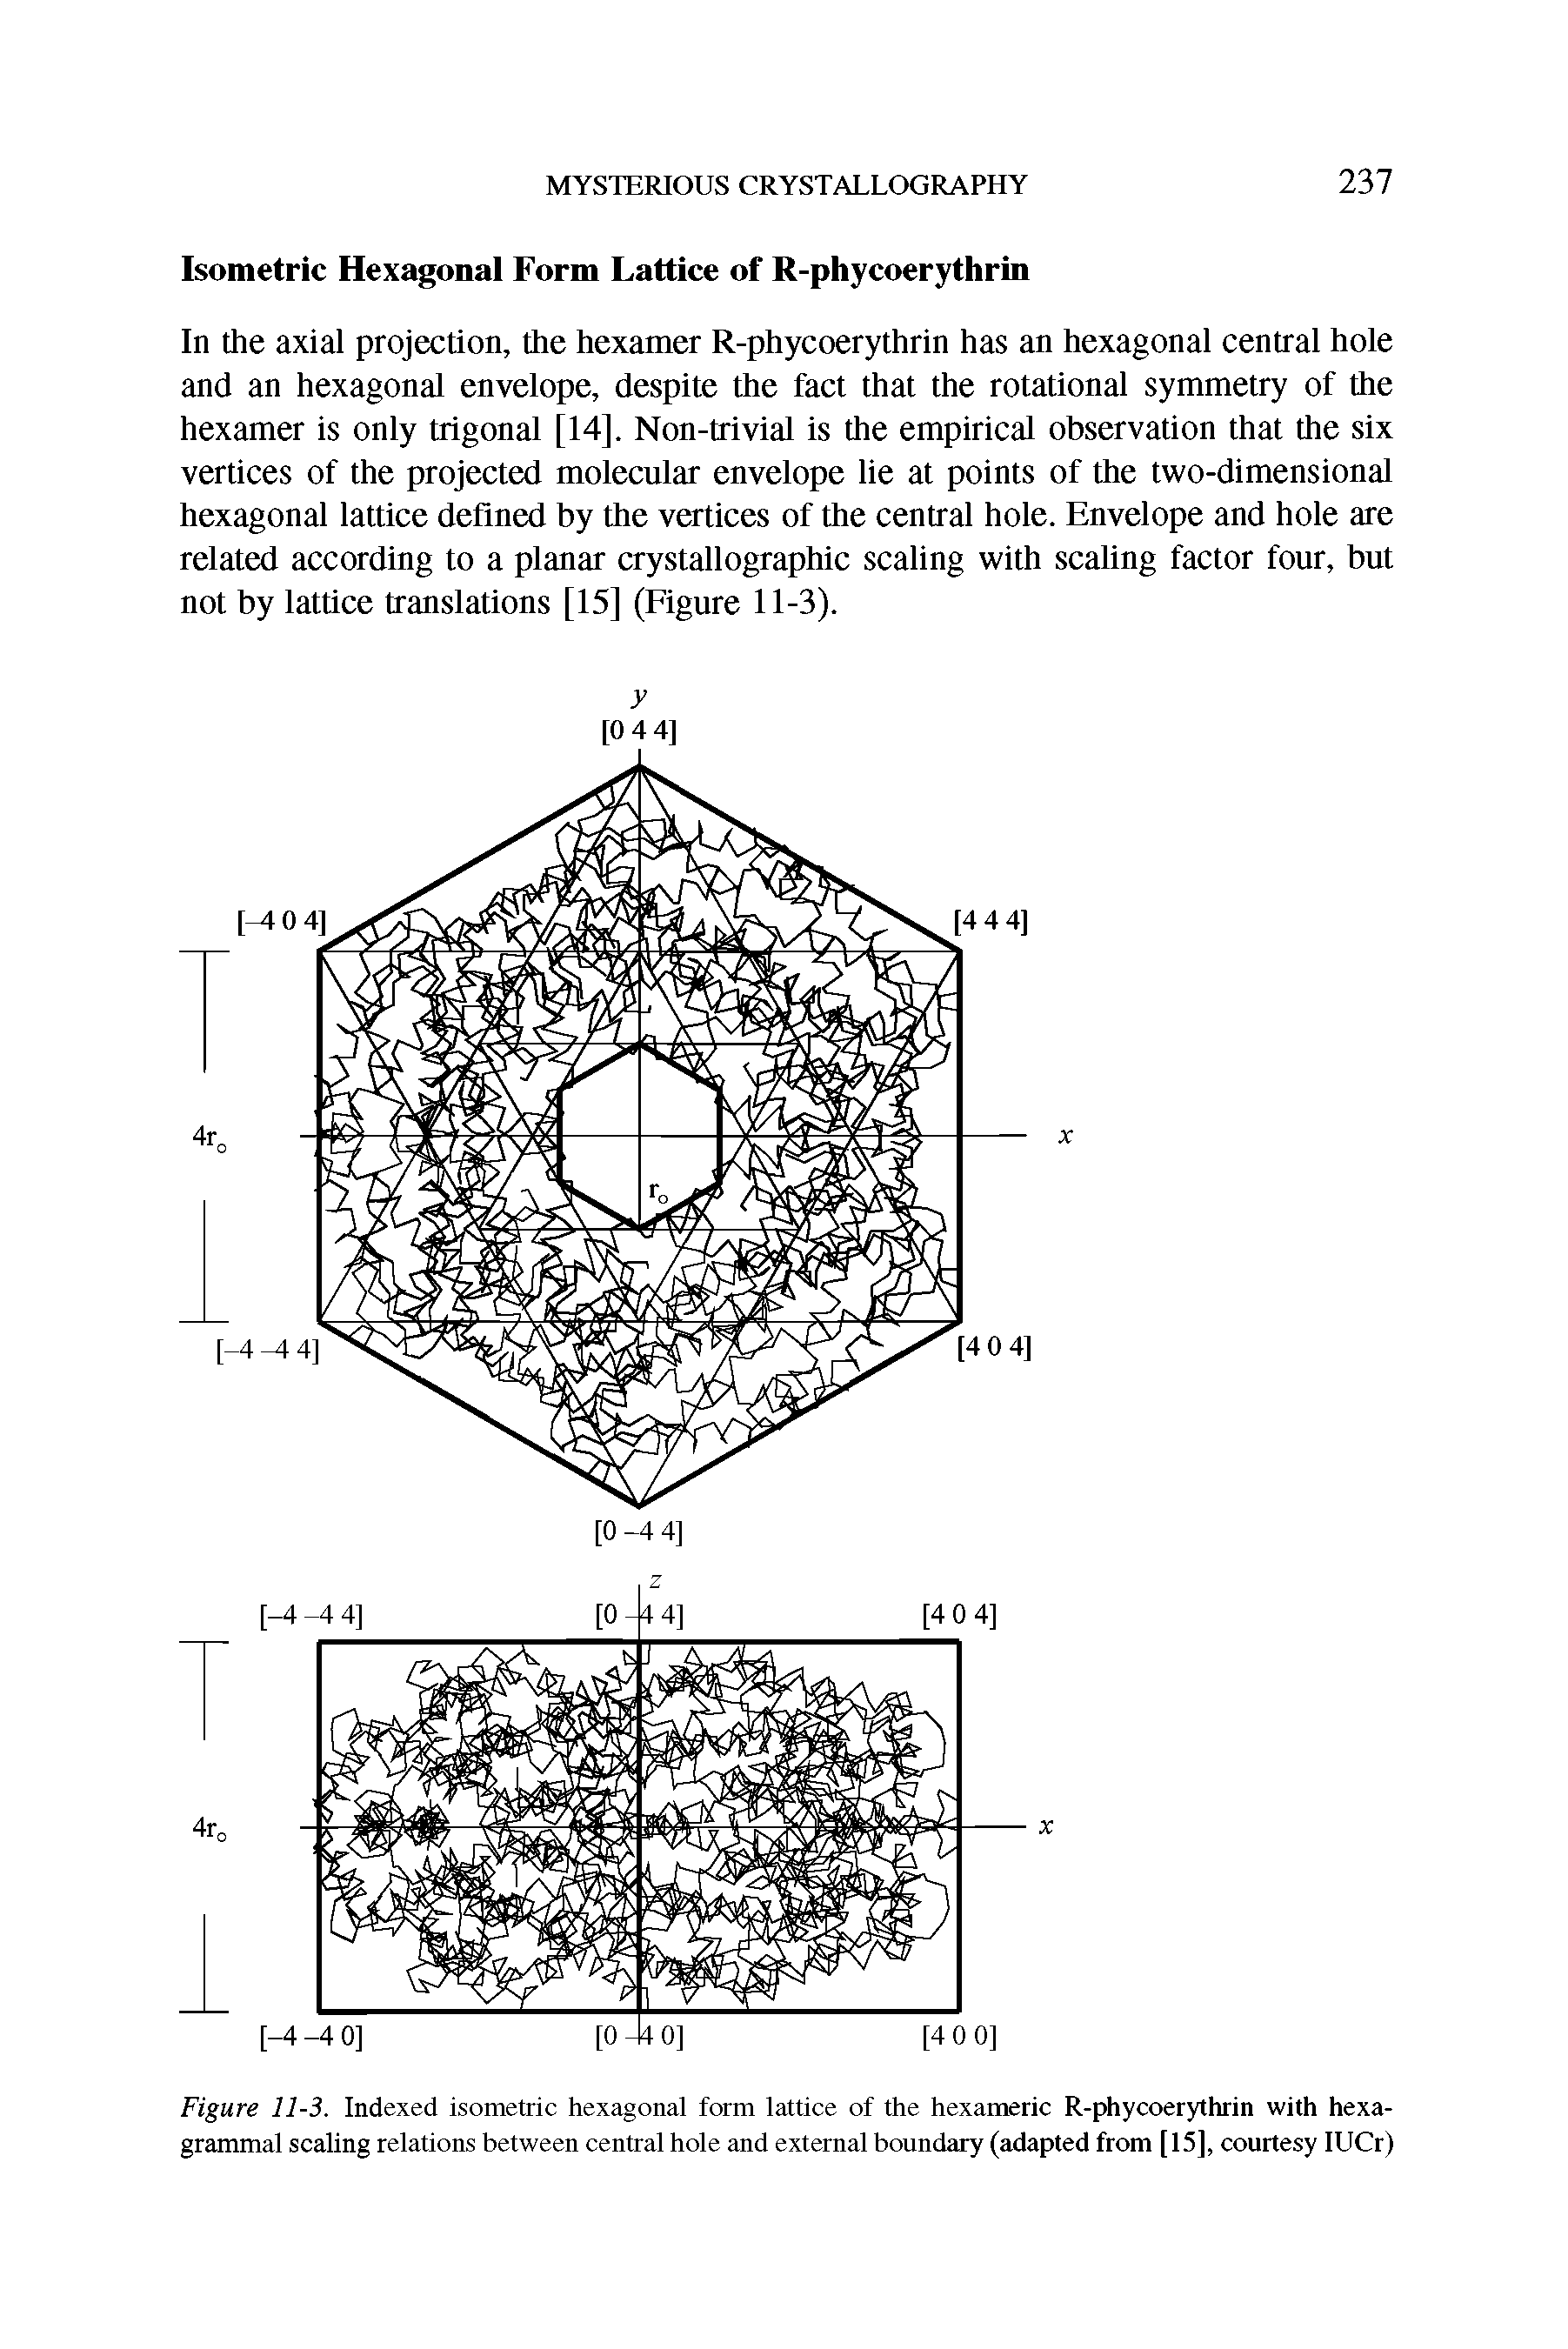 Figure 11-3. Indexed isometric hexagonal form lattice of the hexameric R-phycoerythrin with hexa-...